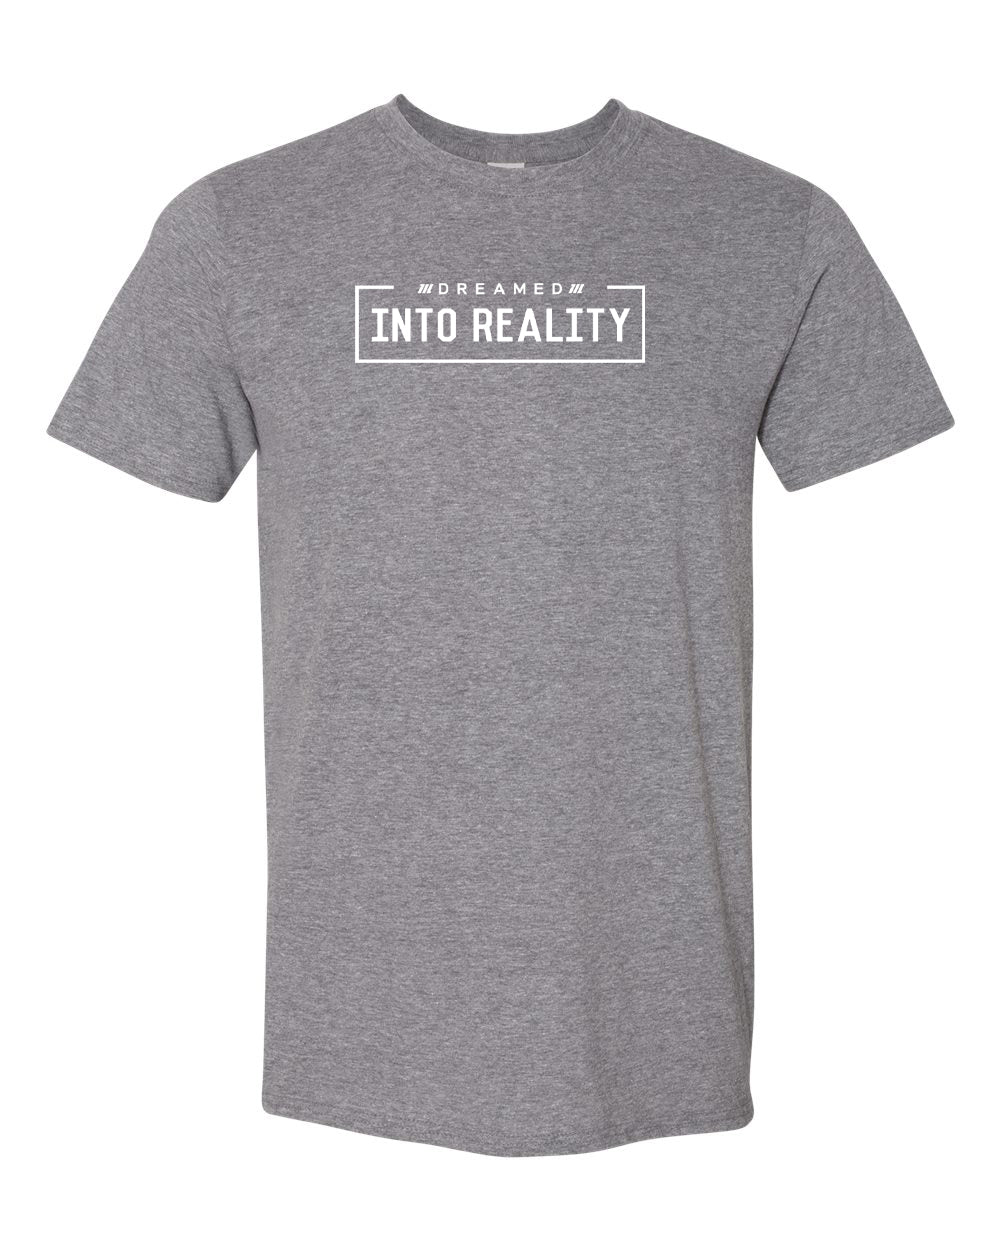 Dream Into Reality Shirt - Grey